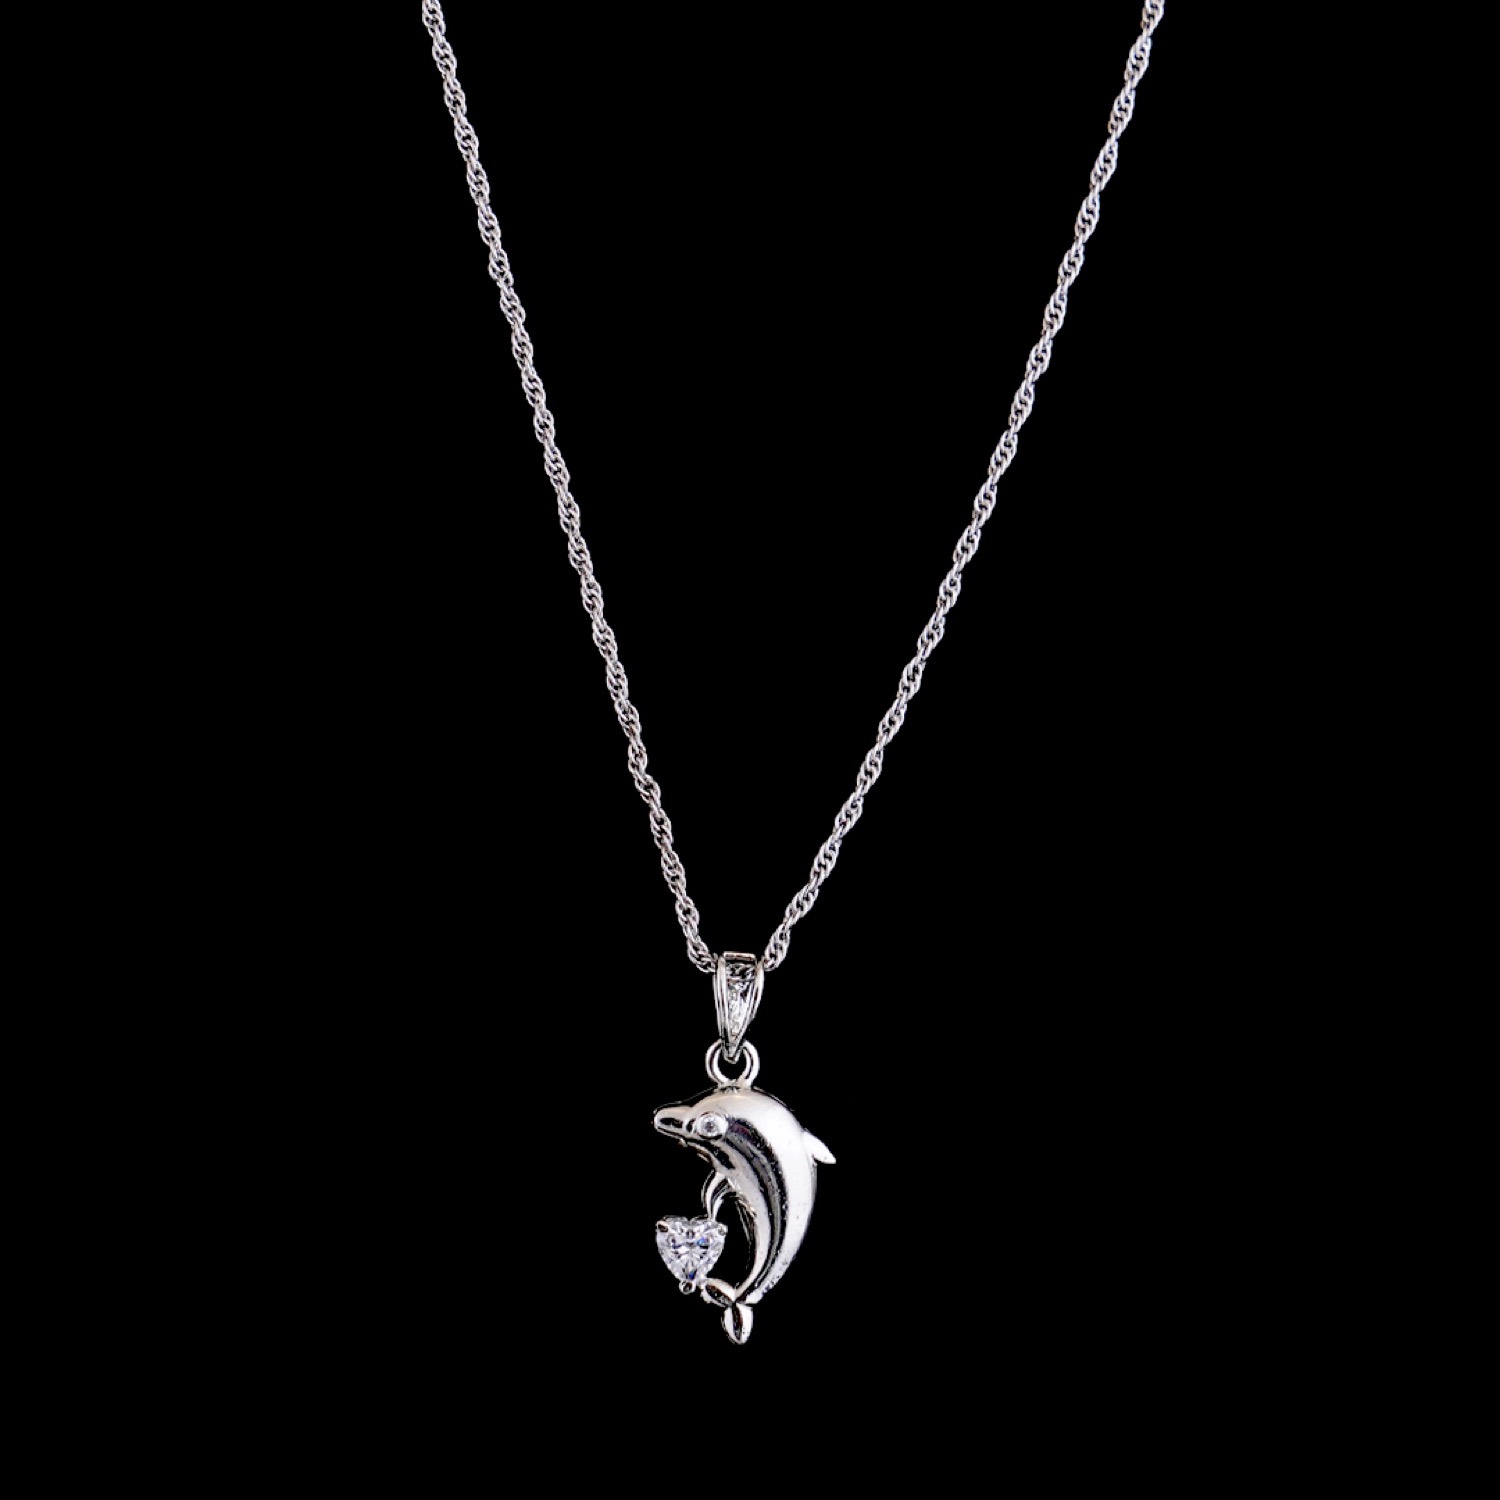 varam_swarovski_dolphin_pendant_silver_chain_1-1